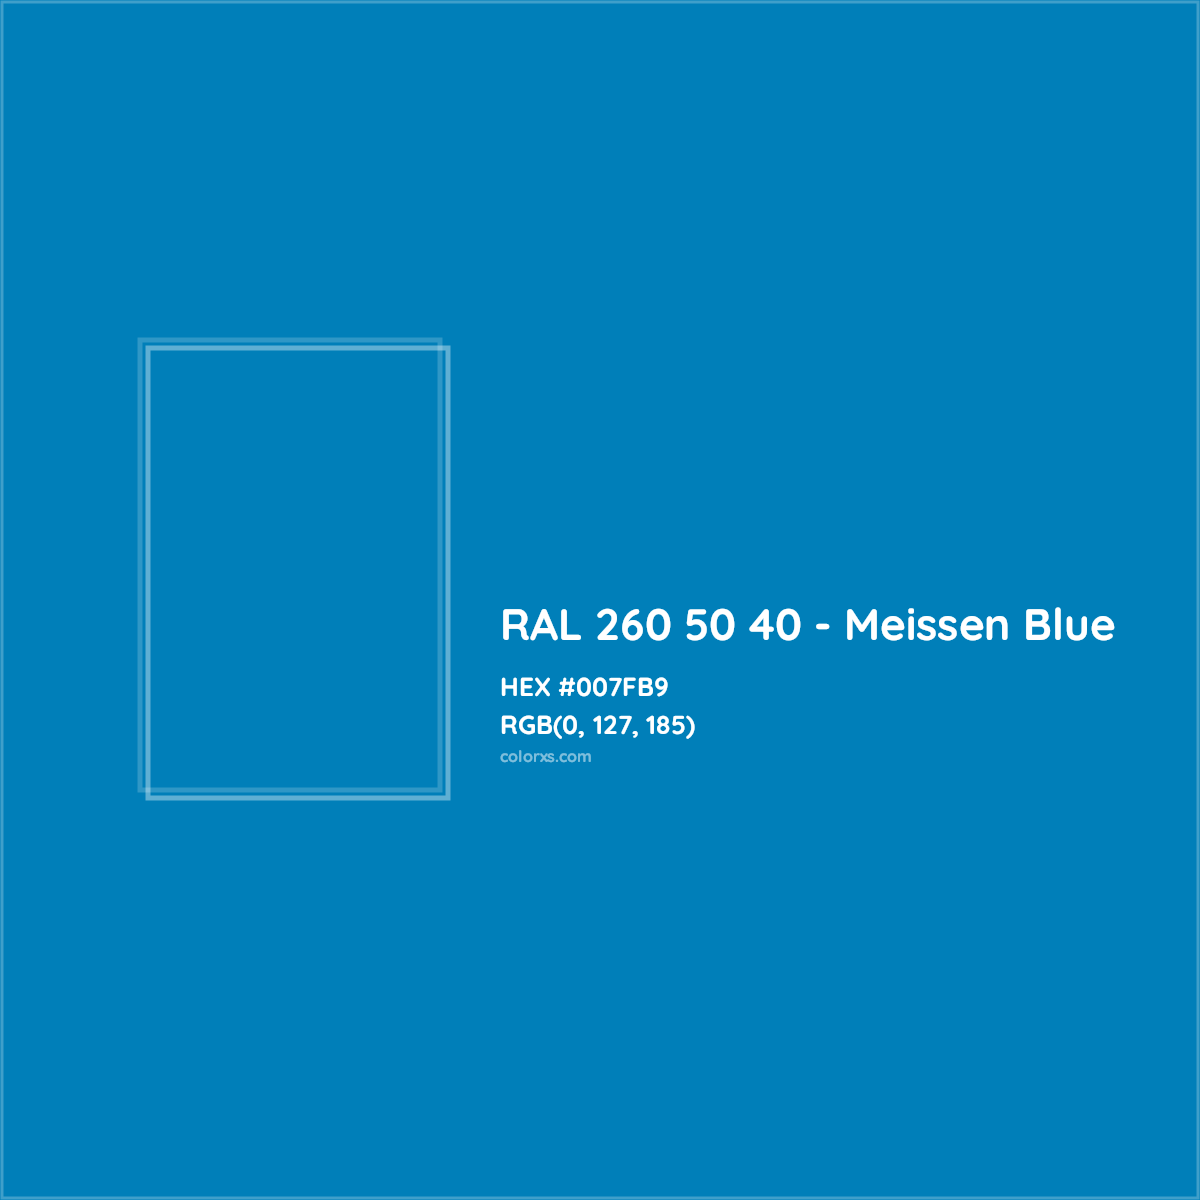 HEX #007FB9 RAL 260 50 40 - Meissen Blue CMS RAL Design - Color Code